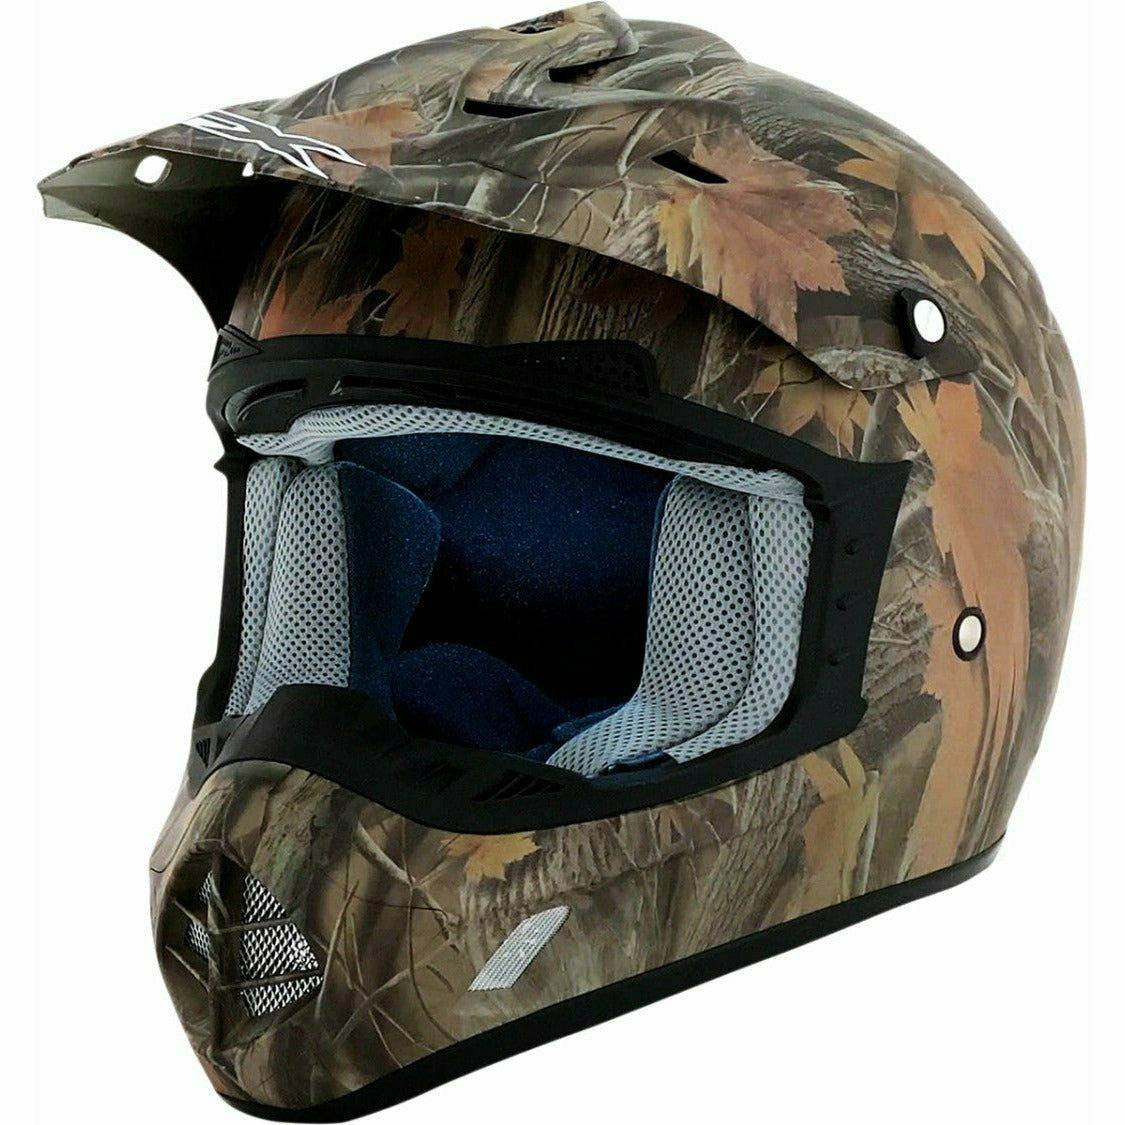 AFX FX-17 Youth Helmet (Wood Camo)